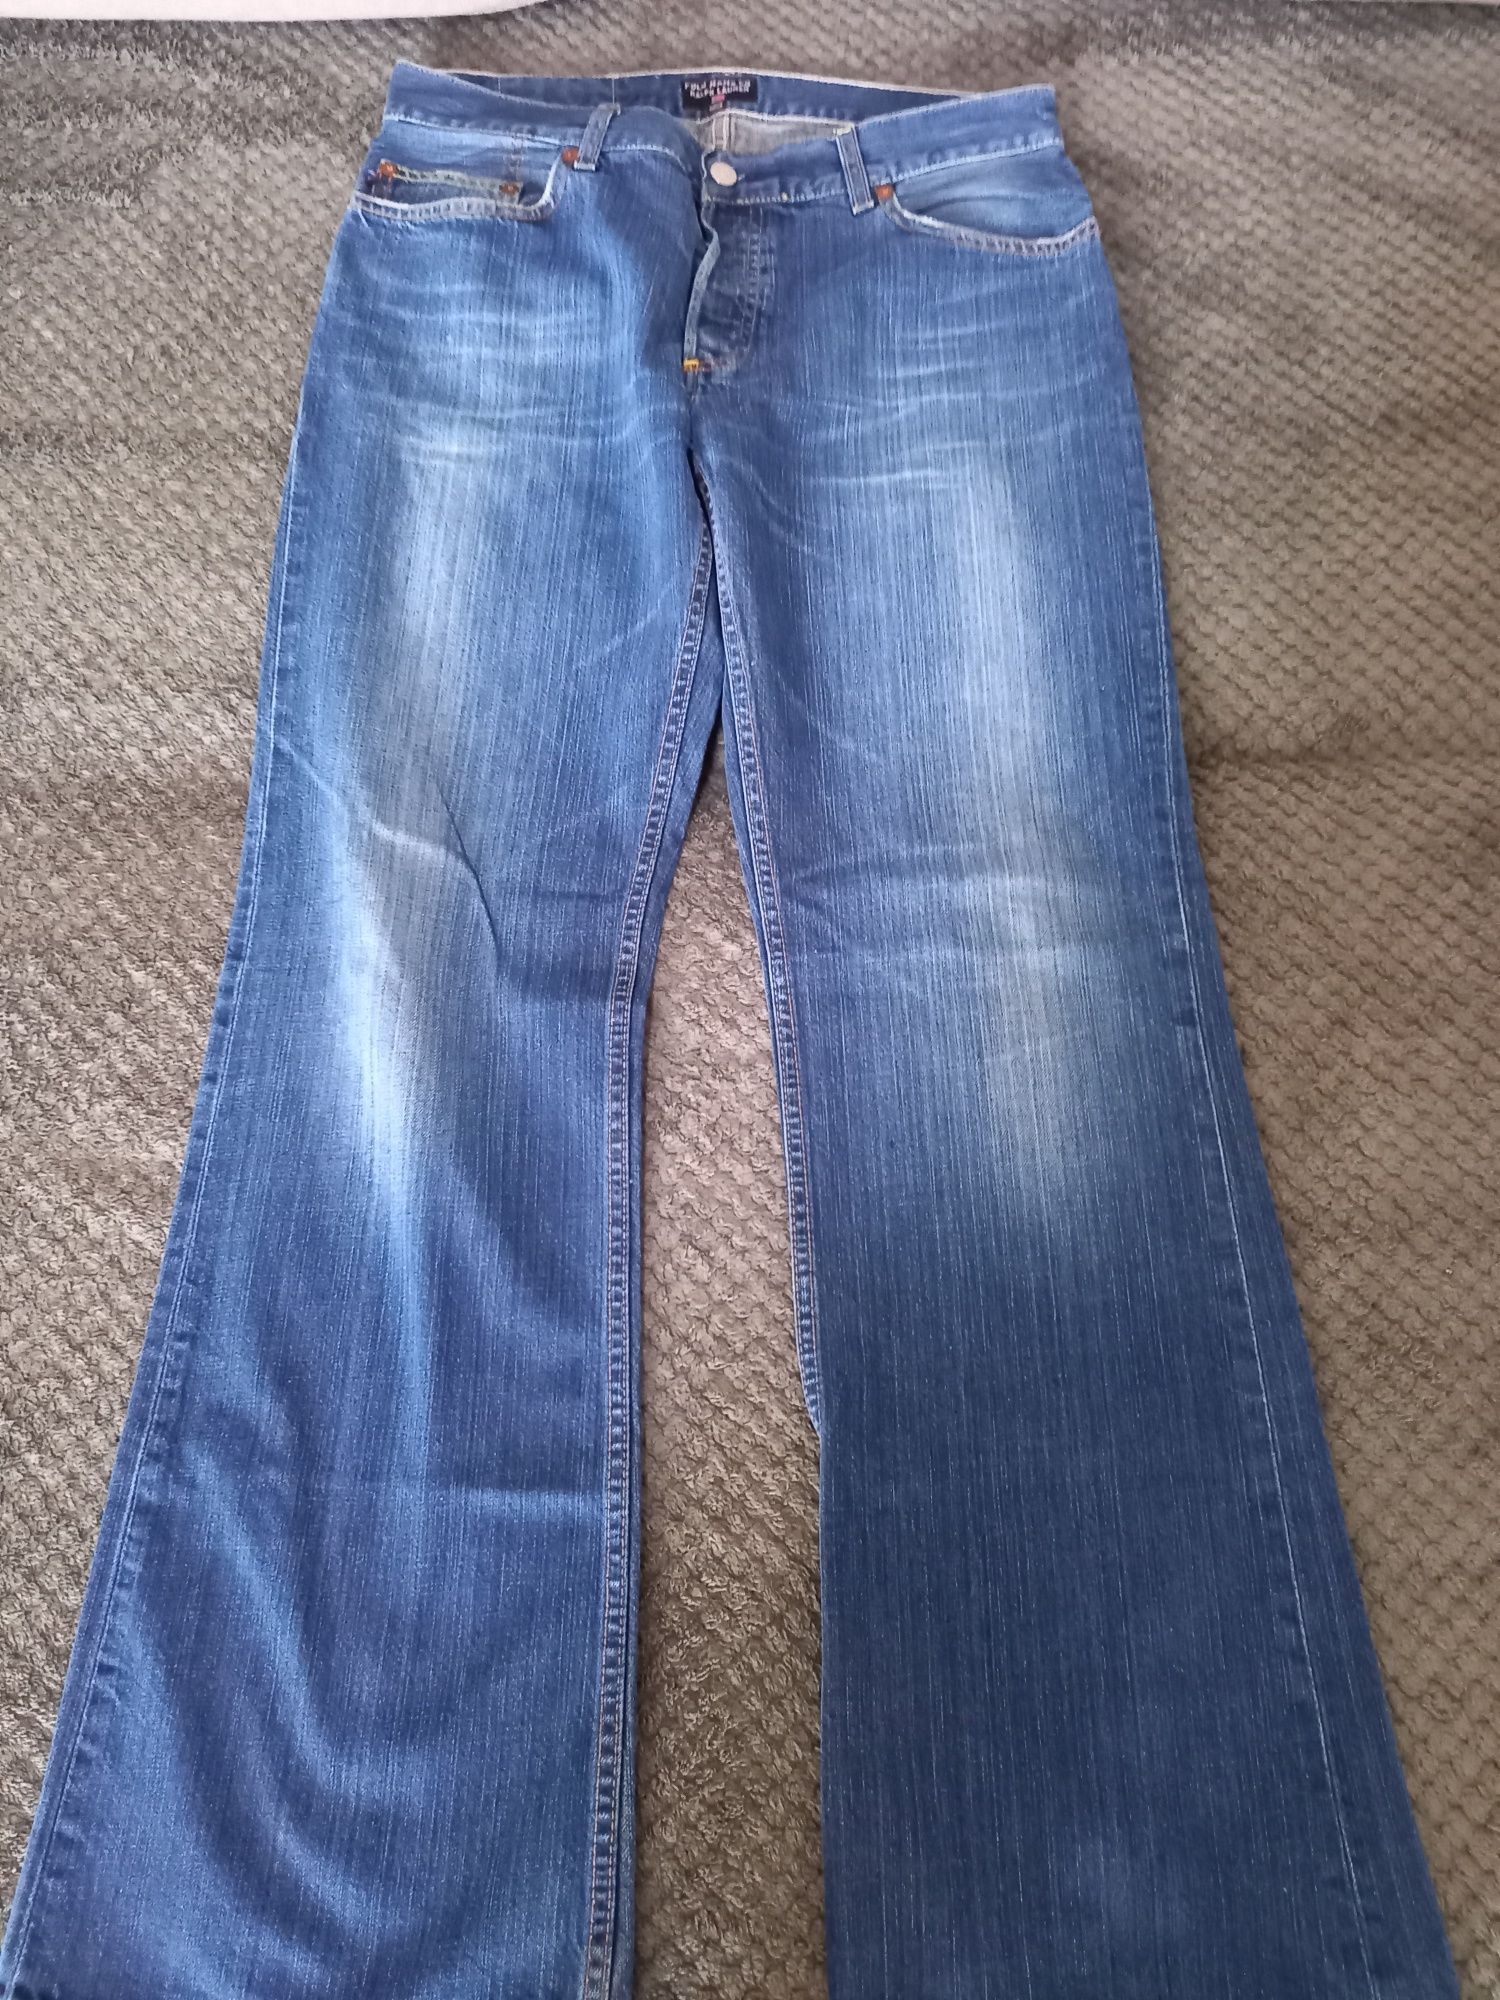 Jeansy Polo Jeans Ralph Lauren rozmiar 32/32